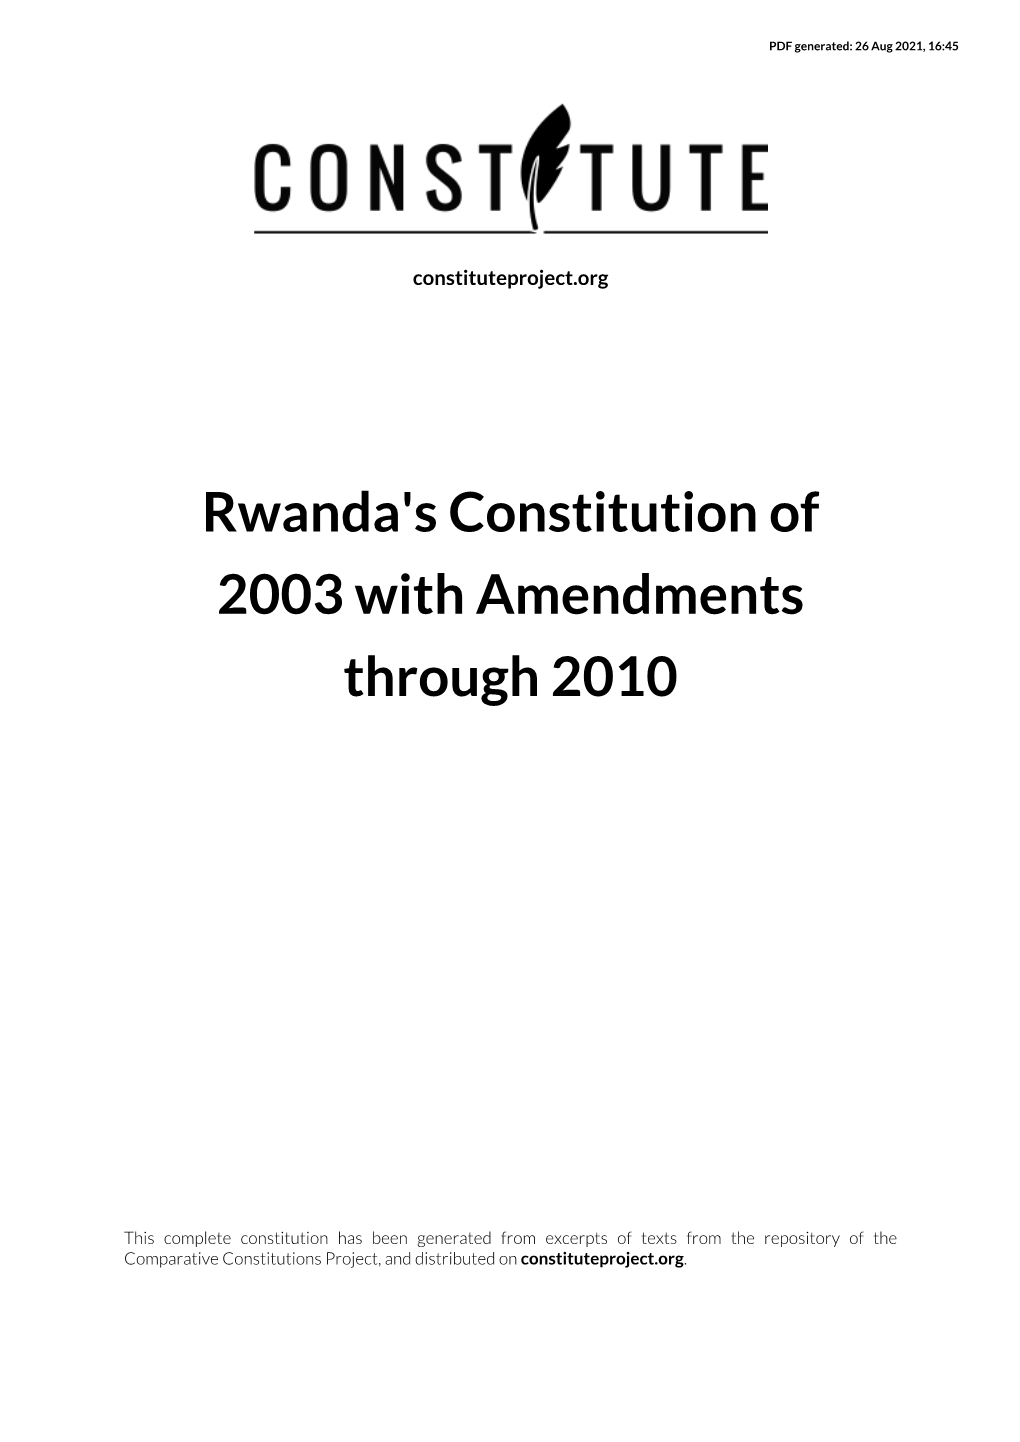 Rwanda's Constitution of 2003 with Amendments Through 2010